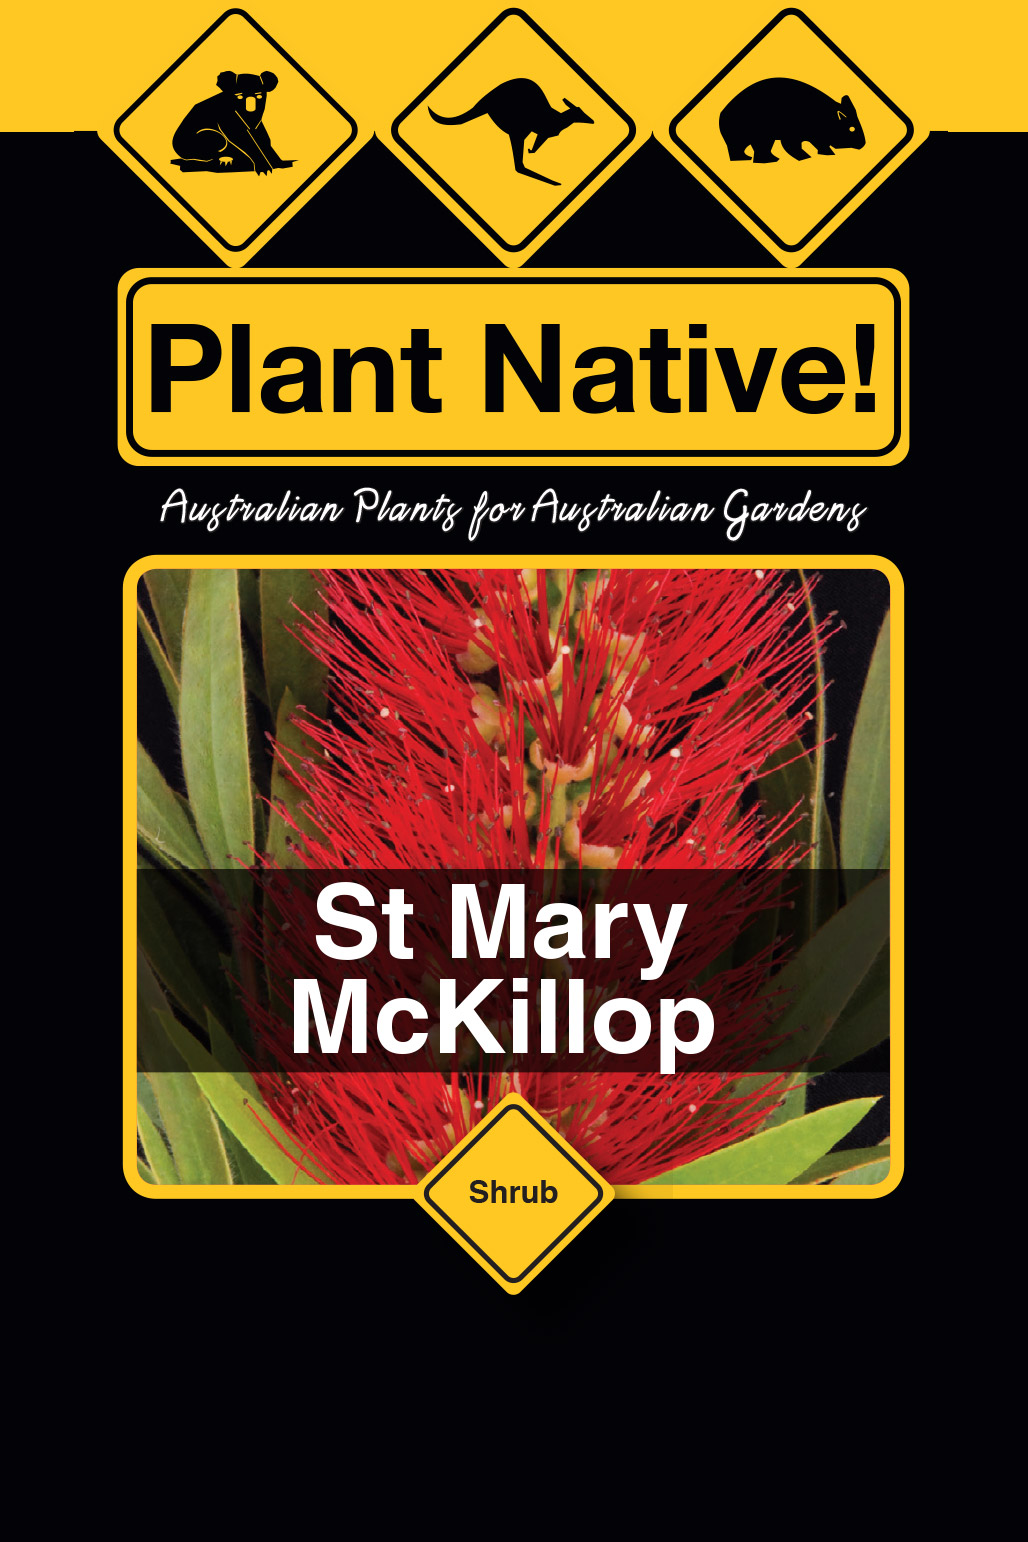 St Mary McKillop - Plant Native!